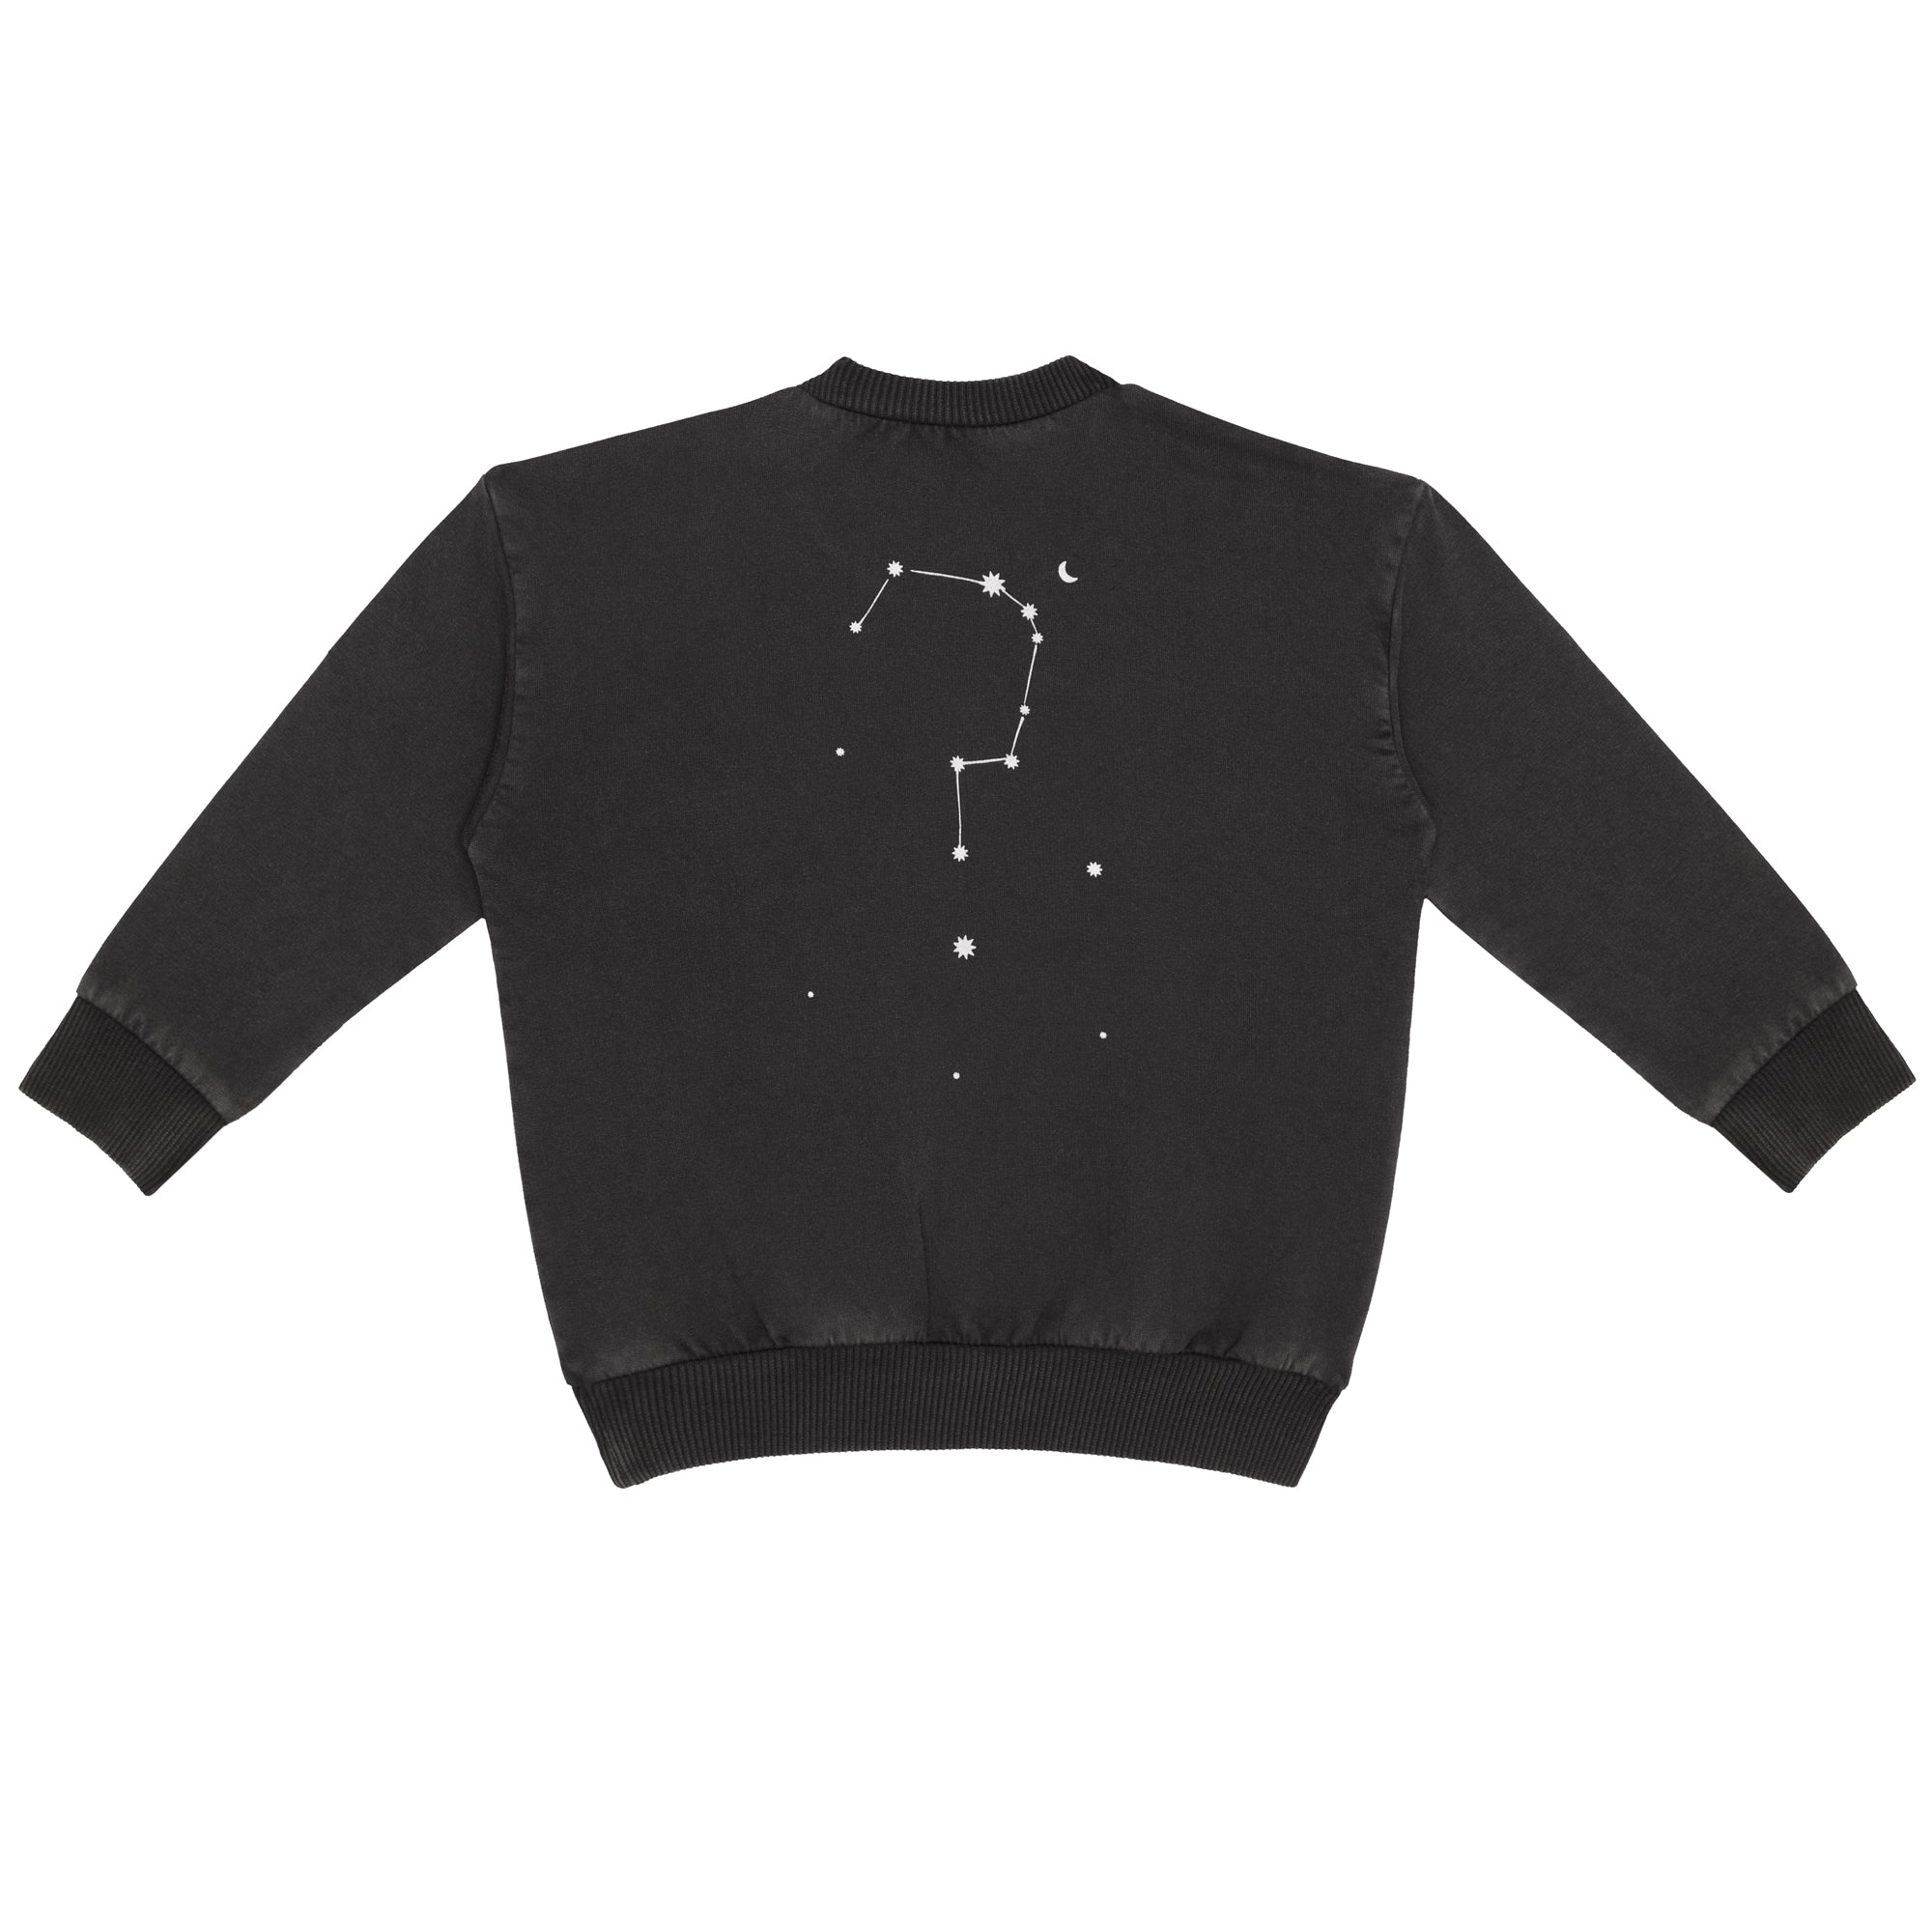 Little Indians - sweater zodiac sign - vintage wash black